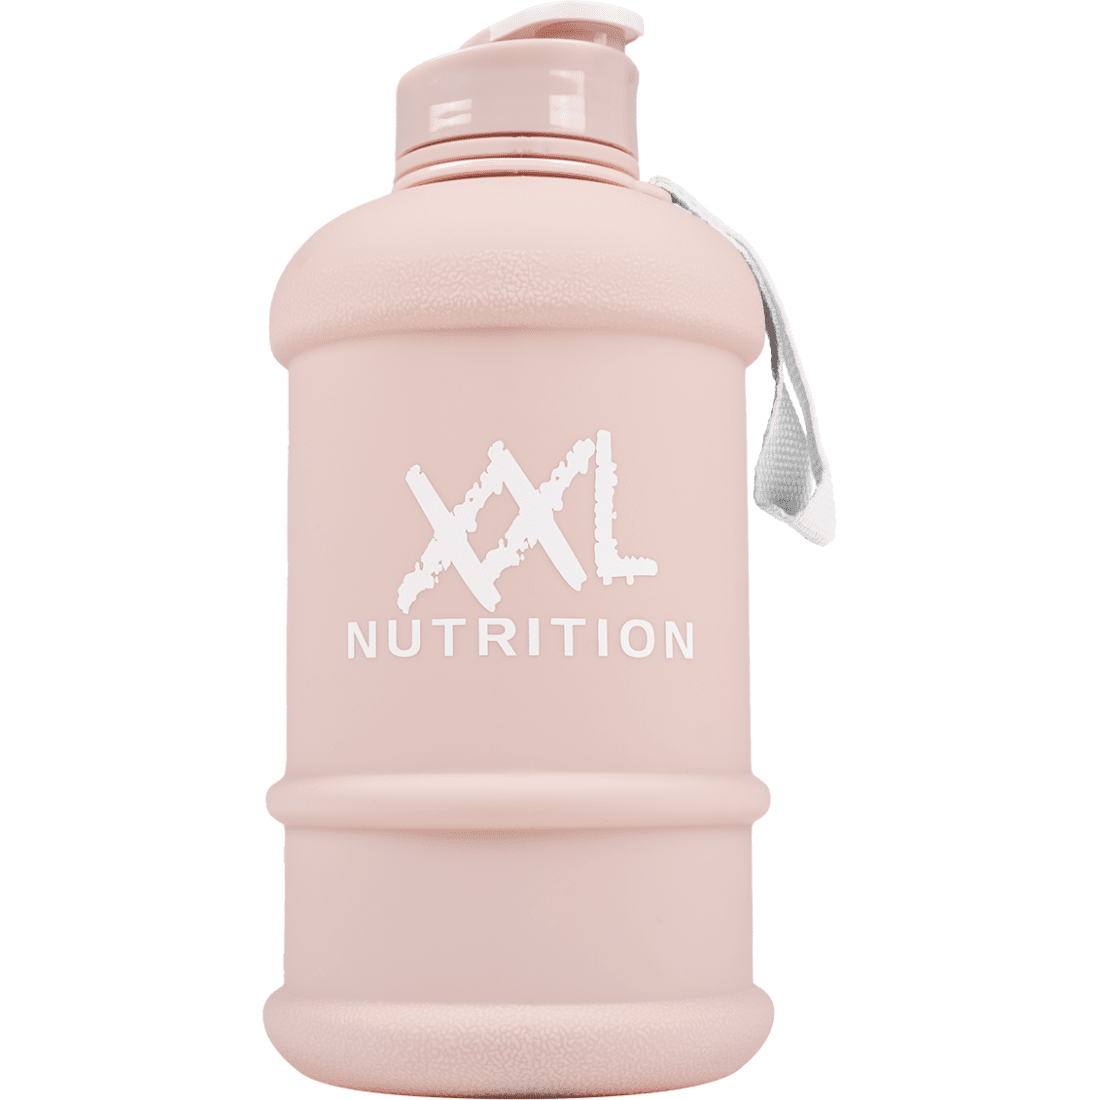 XXL Nutrition Coated Waterjug 2200 ml